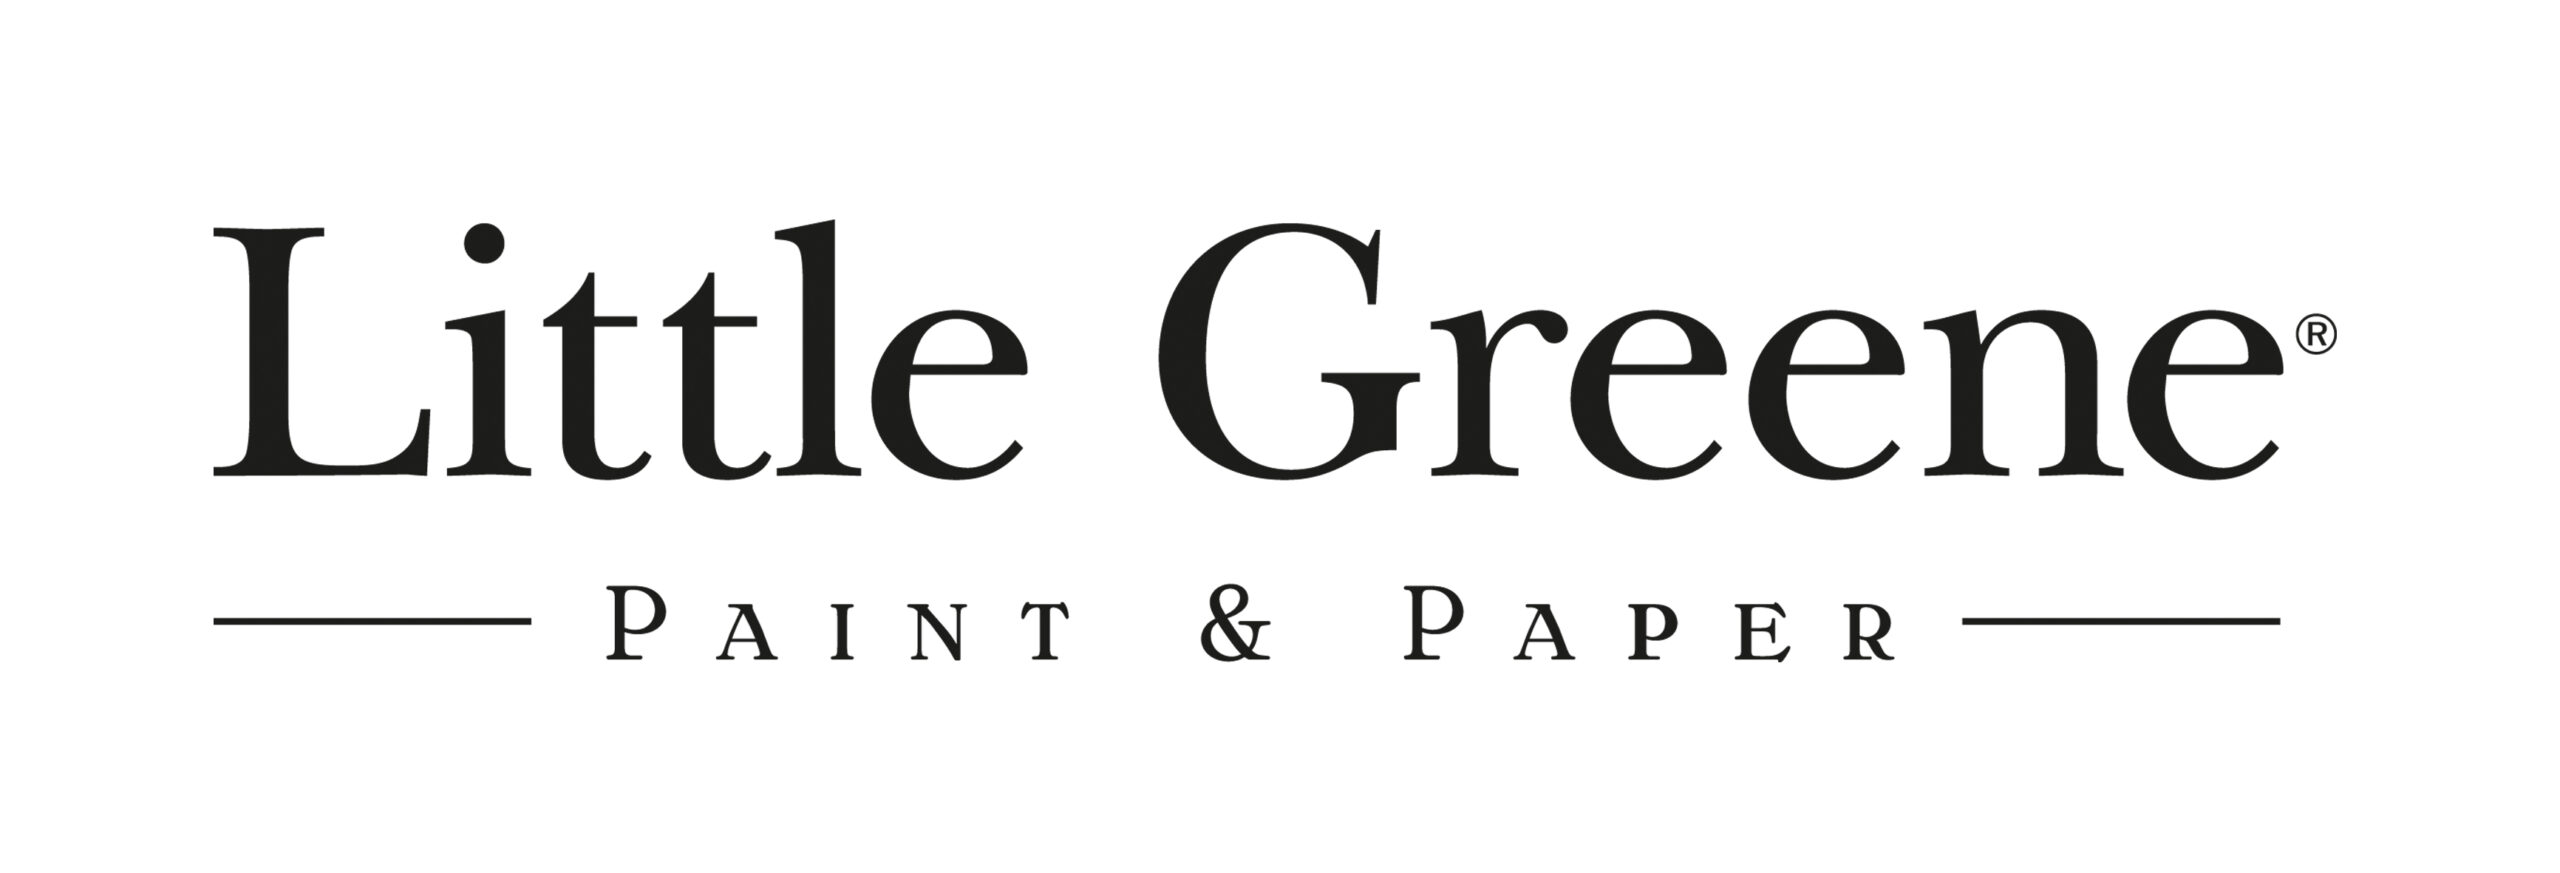 Little Greene Paint & Paper logo